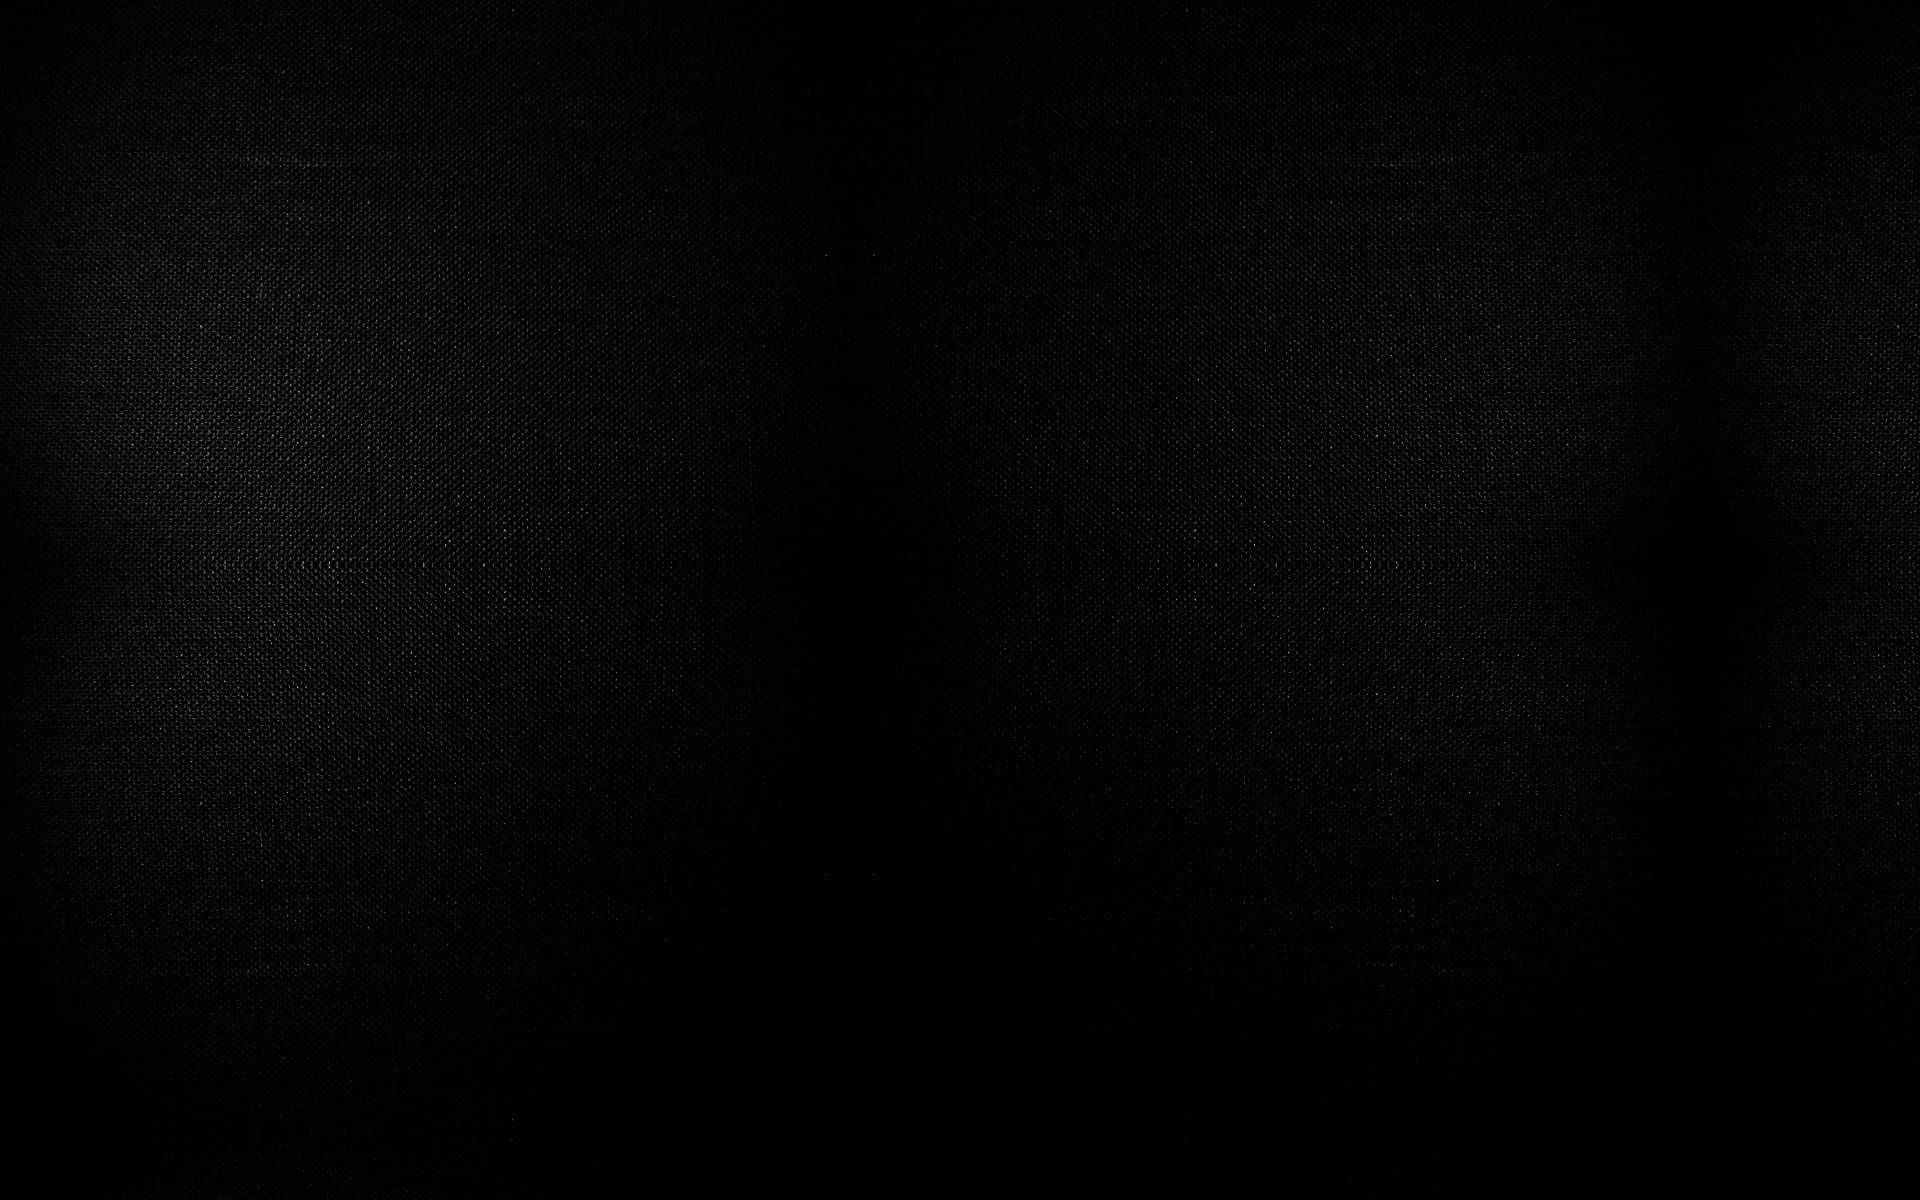 Solid Black Wallpapers 1920x1080 - Wallpaper Cave